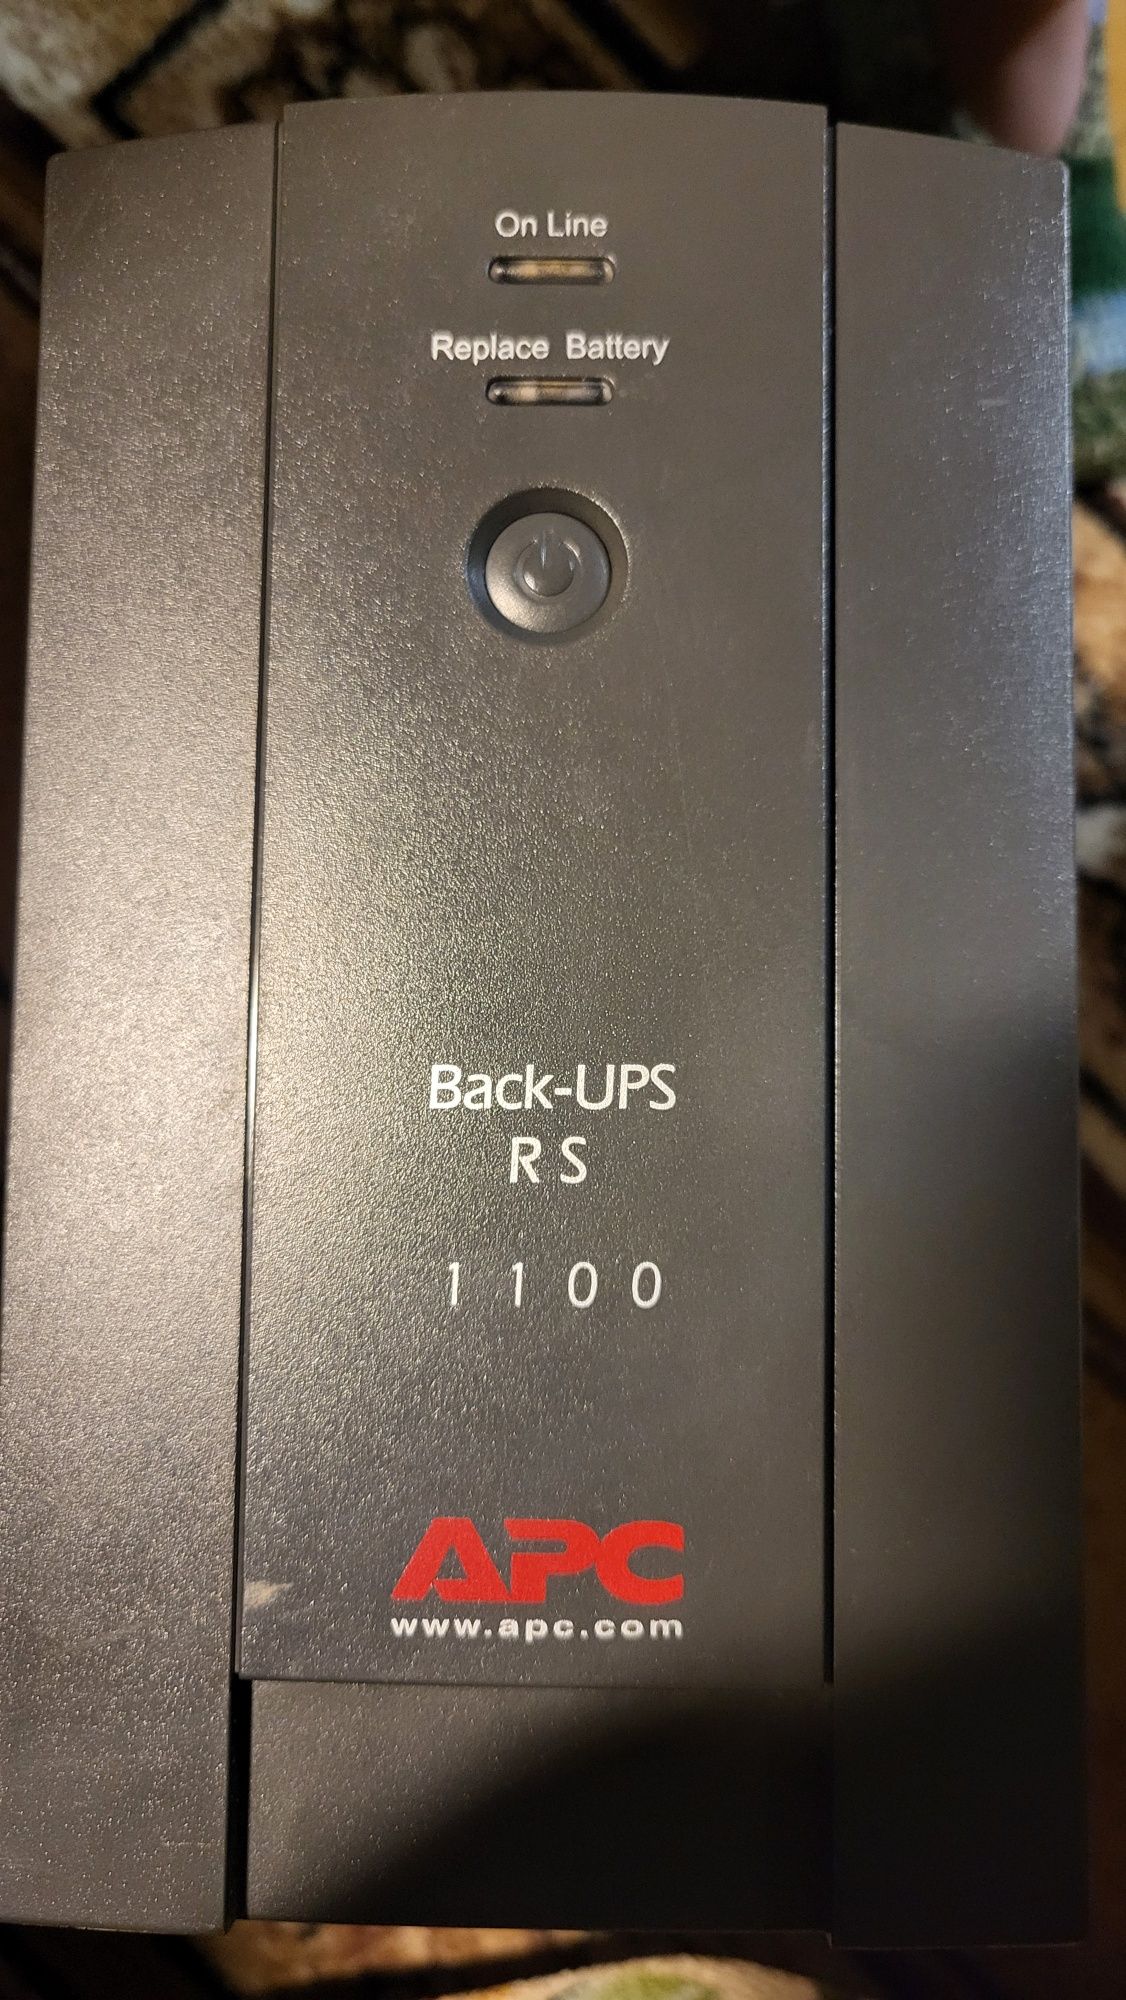 Apc back-ups rs 1100